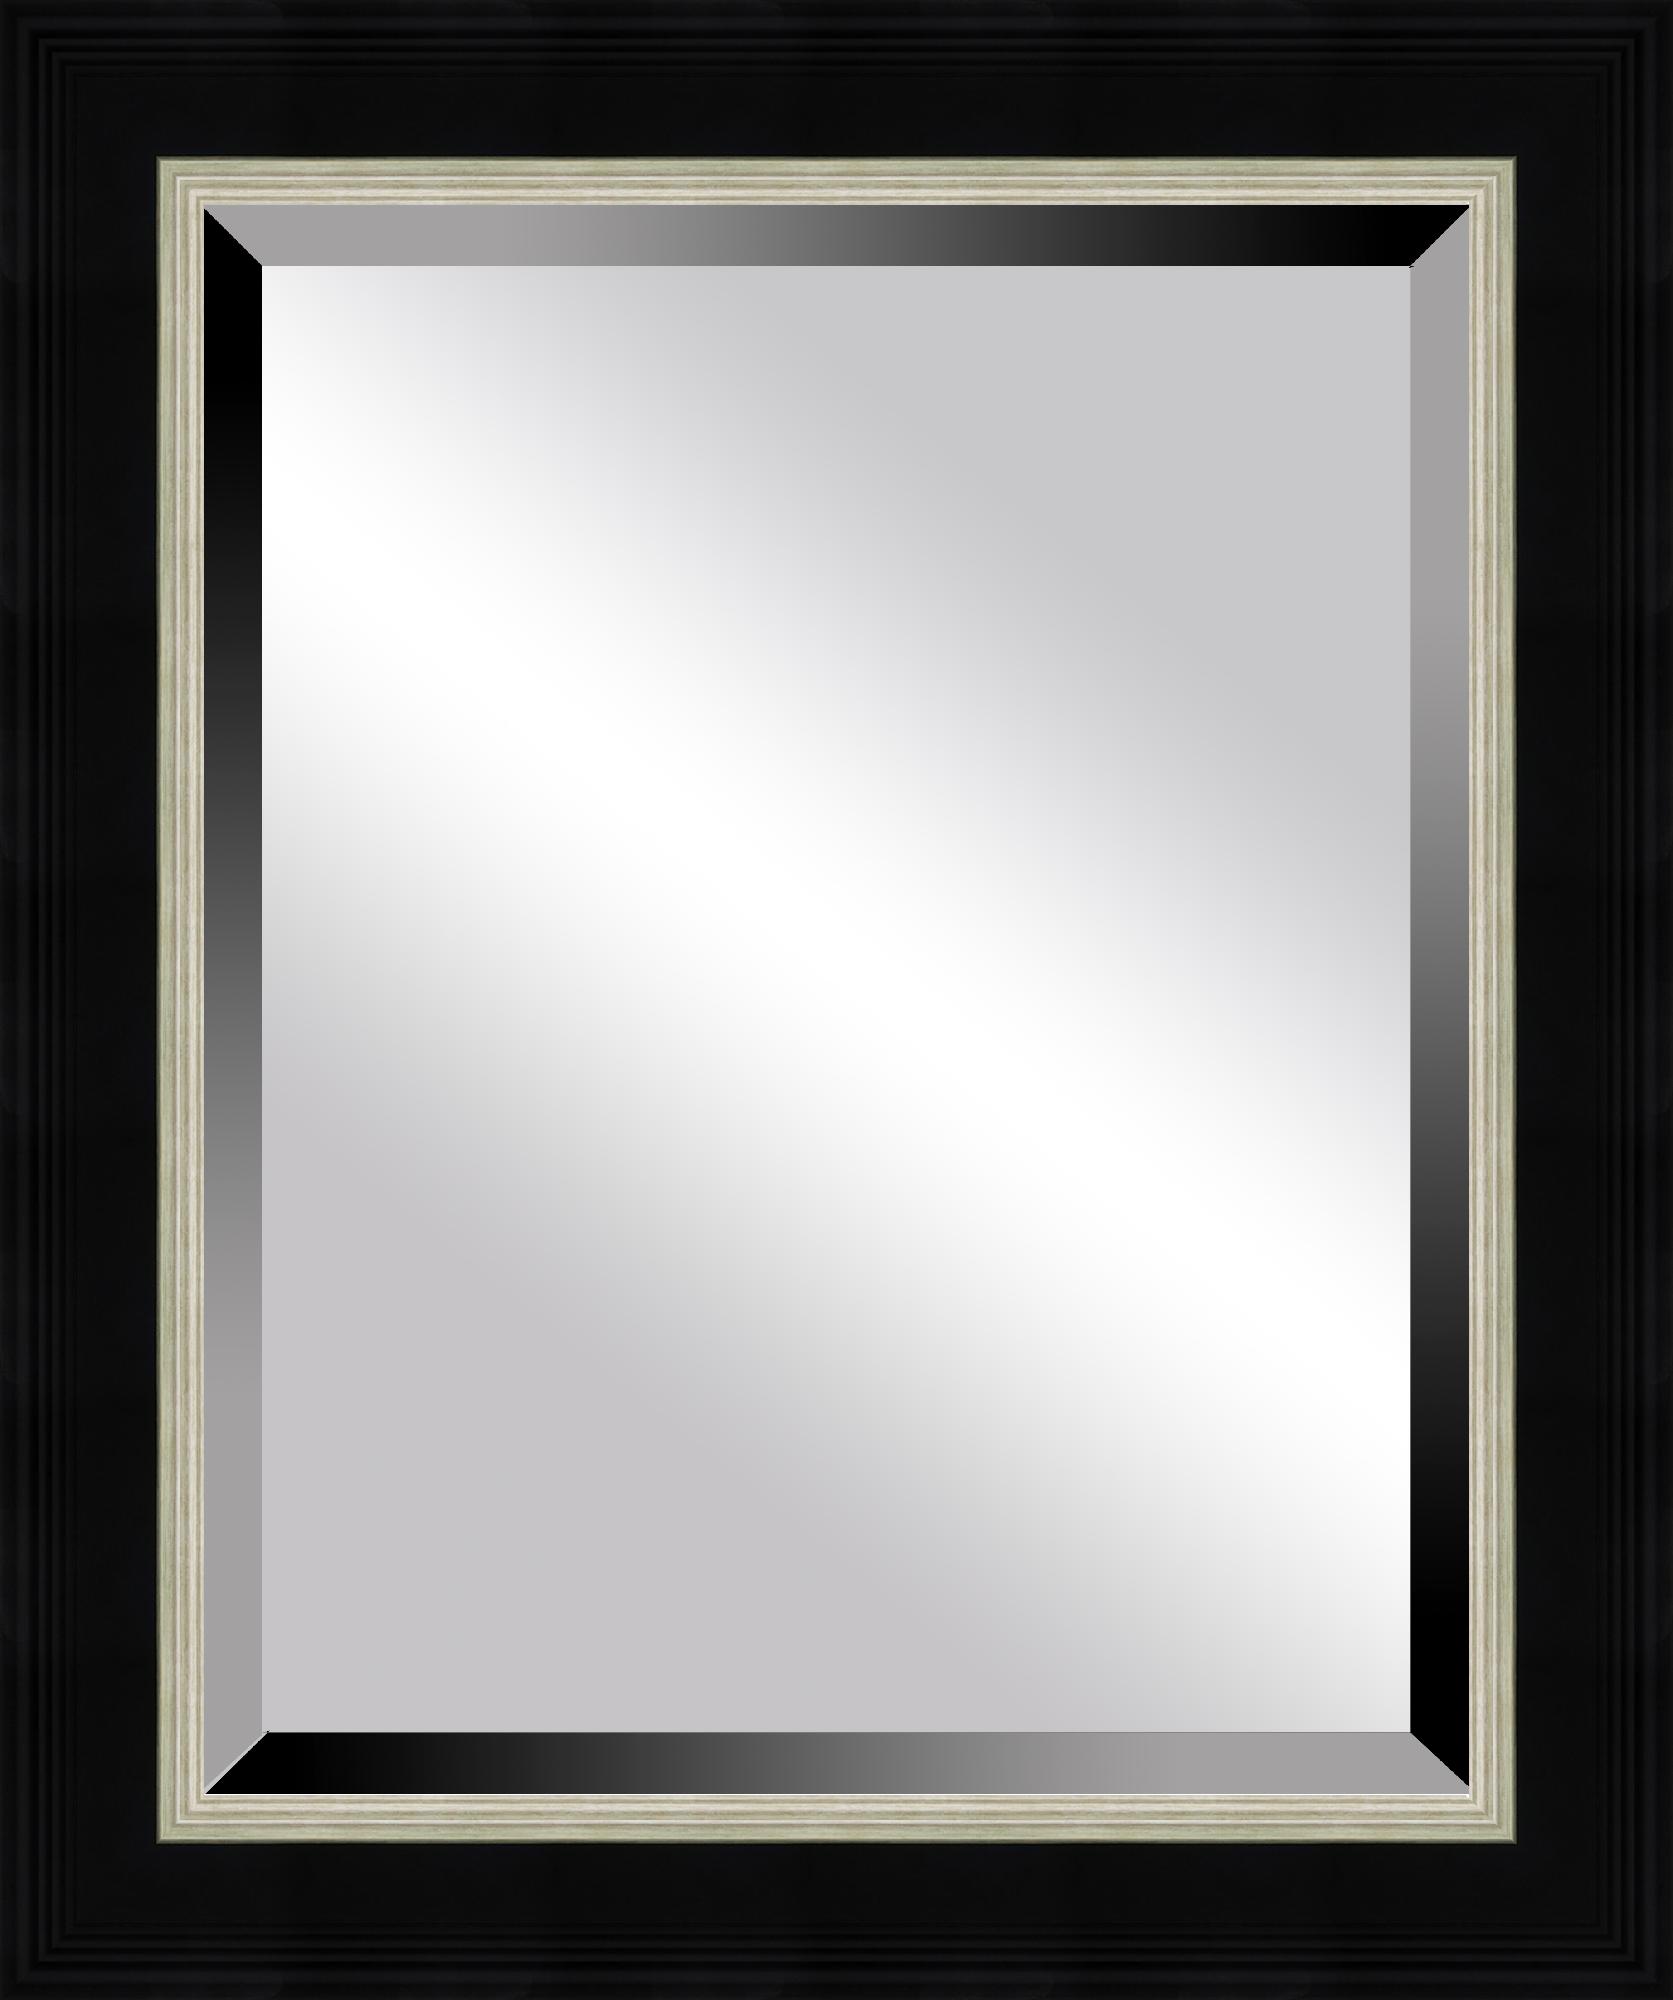 Black With A Silver Lip Wall Mirror 24 X 36 Inch